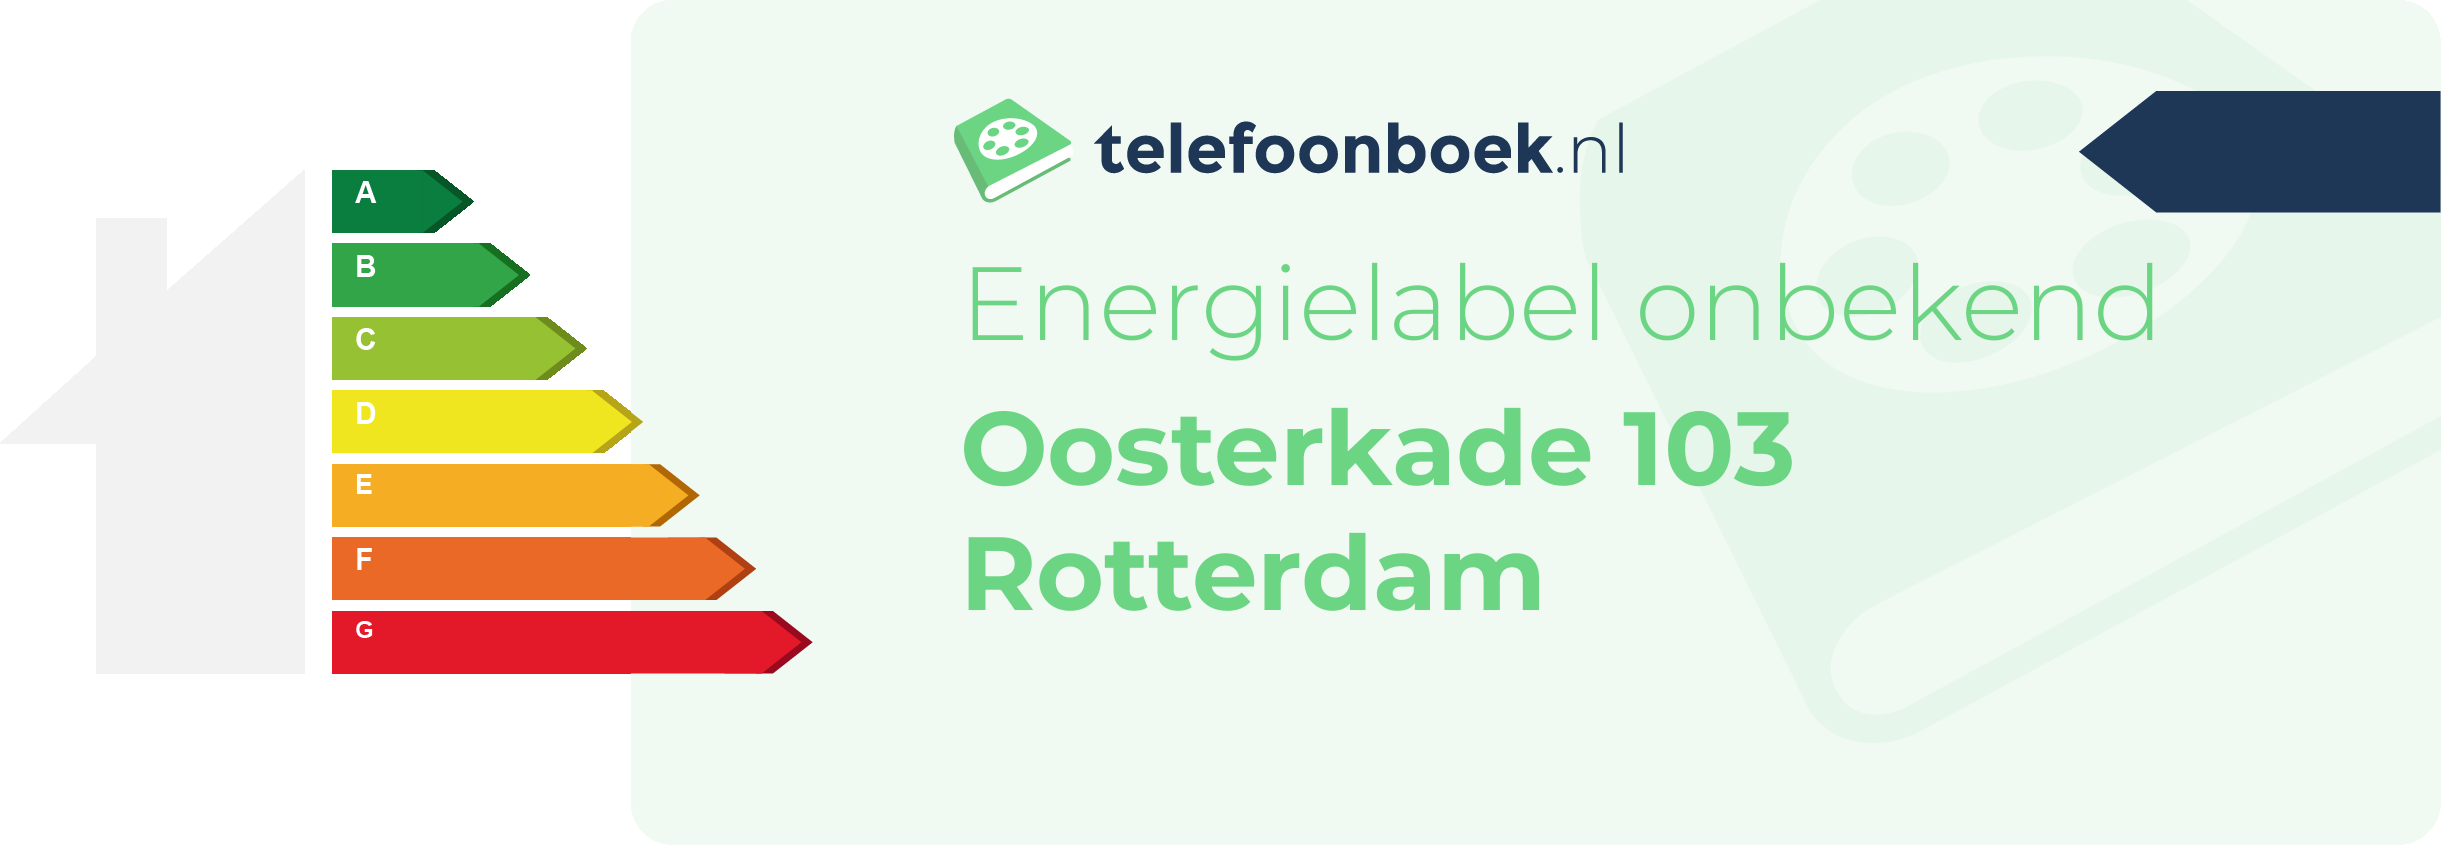 Energielabel Oosterkade 103 Rotterdam